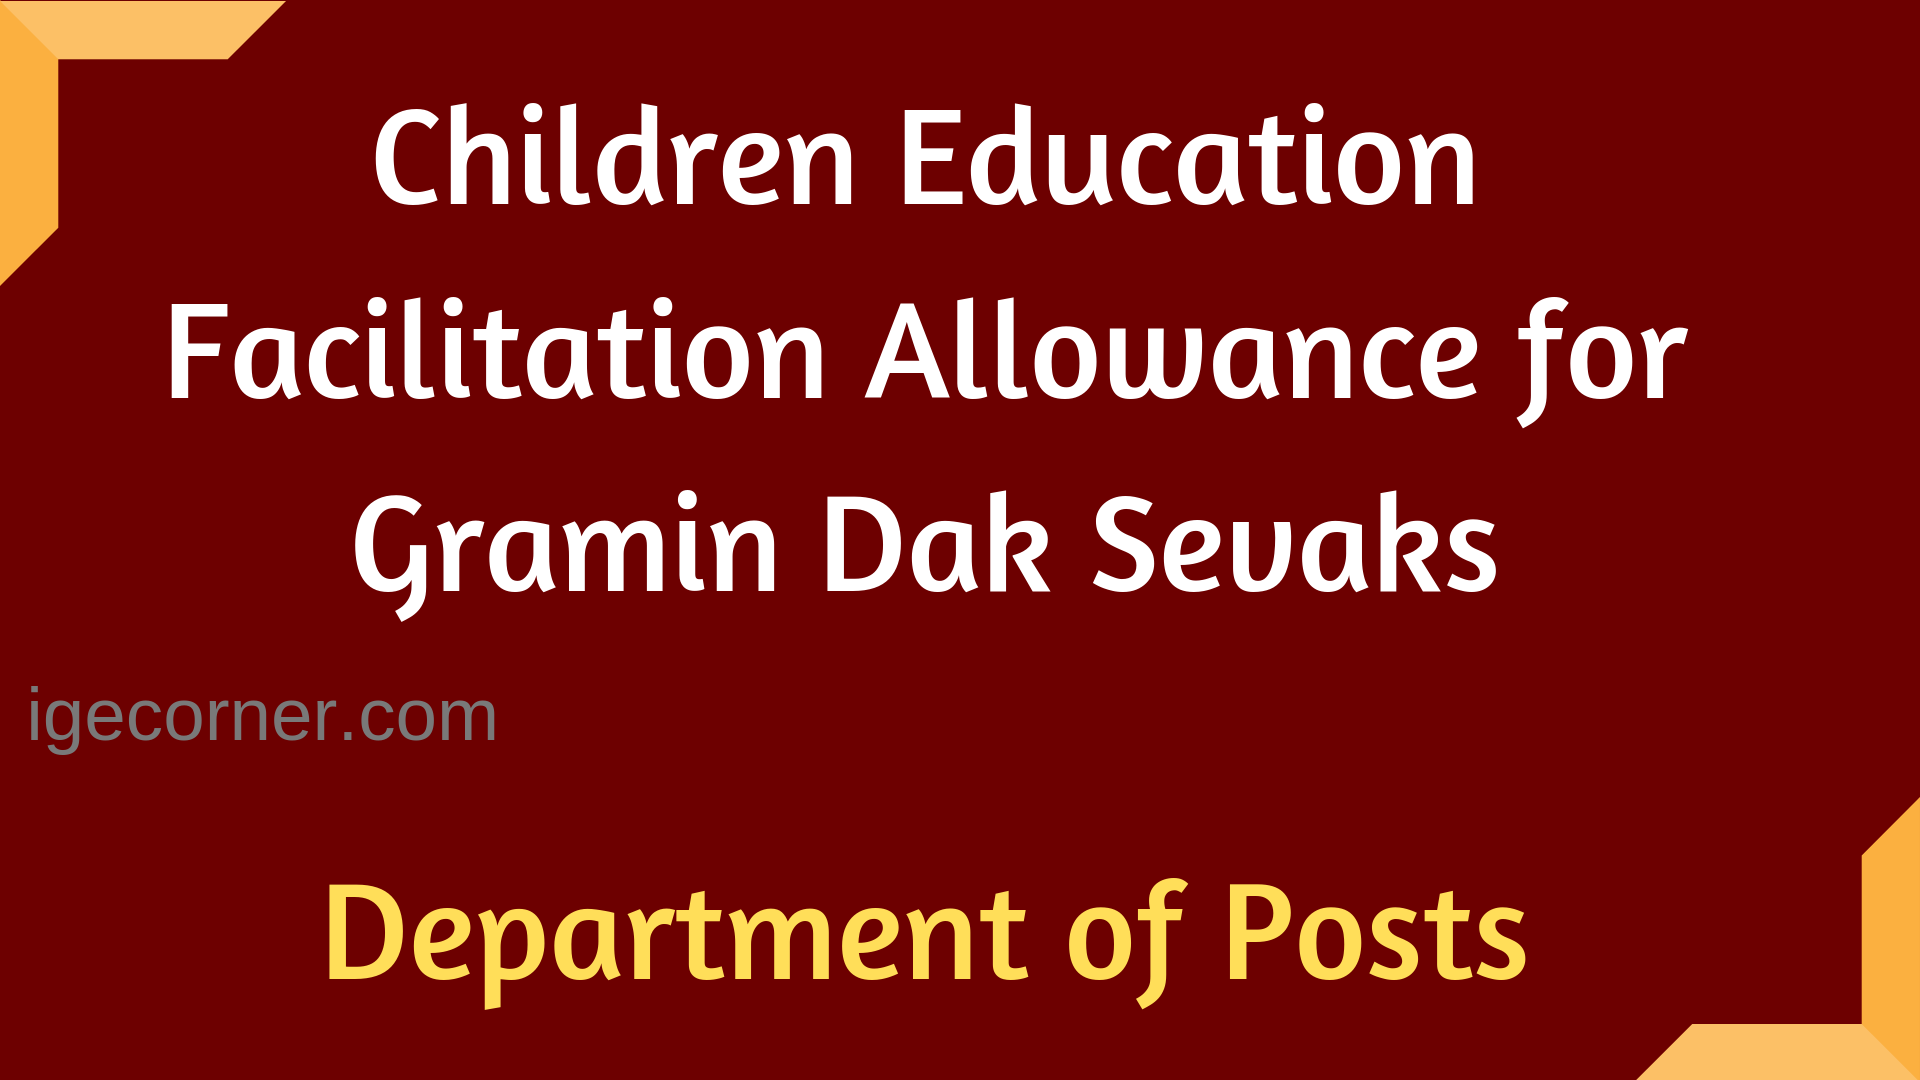 Children Education Facilitation Allowance